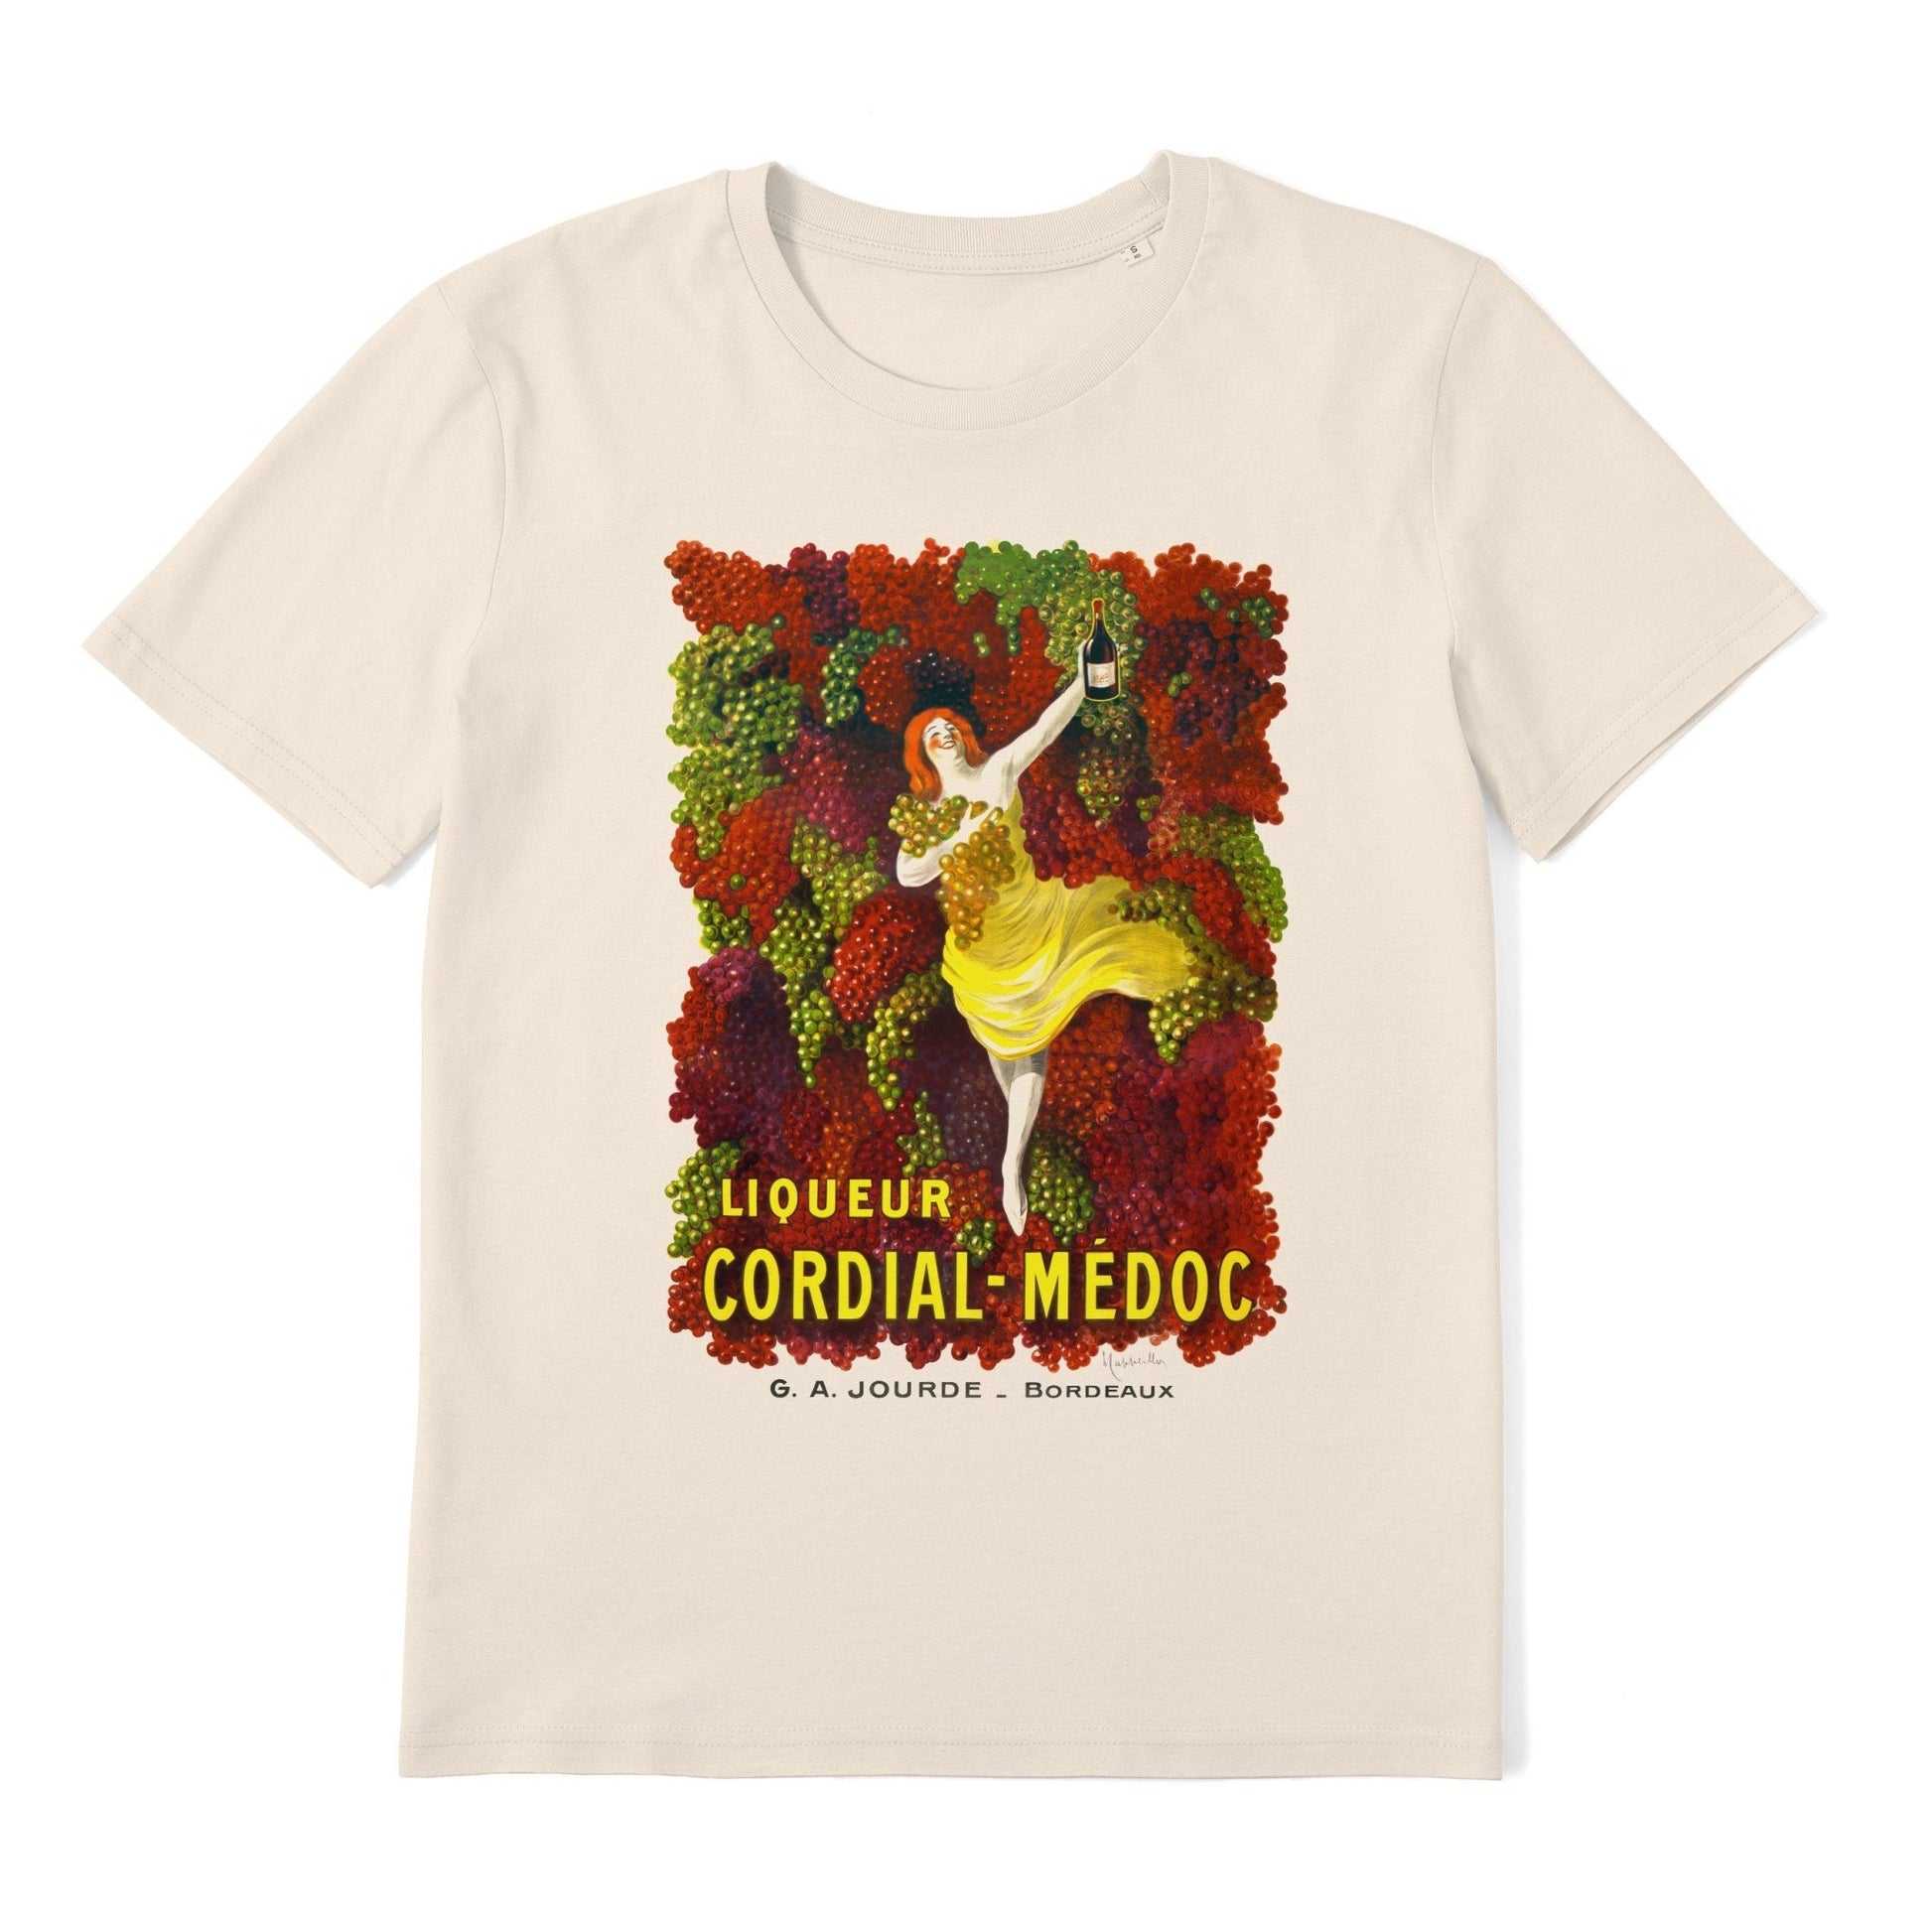 LEONETTO CAPPIELLO - Liquor Cordial-Medoc T-Shirt - Pathos Studio - T-Shirts